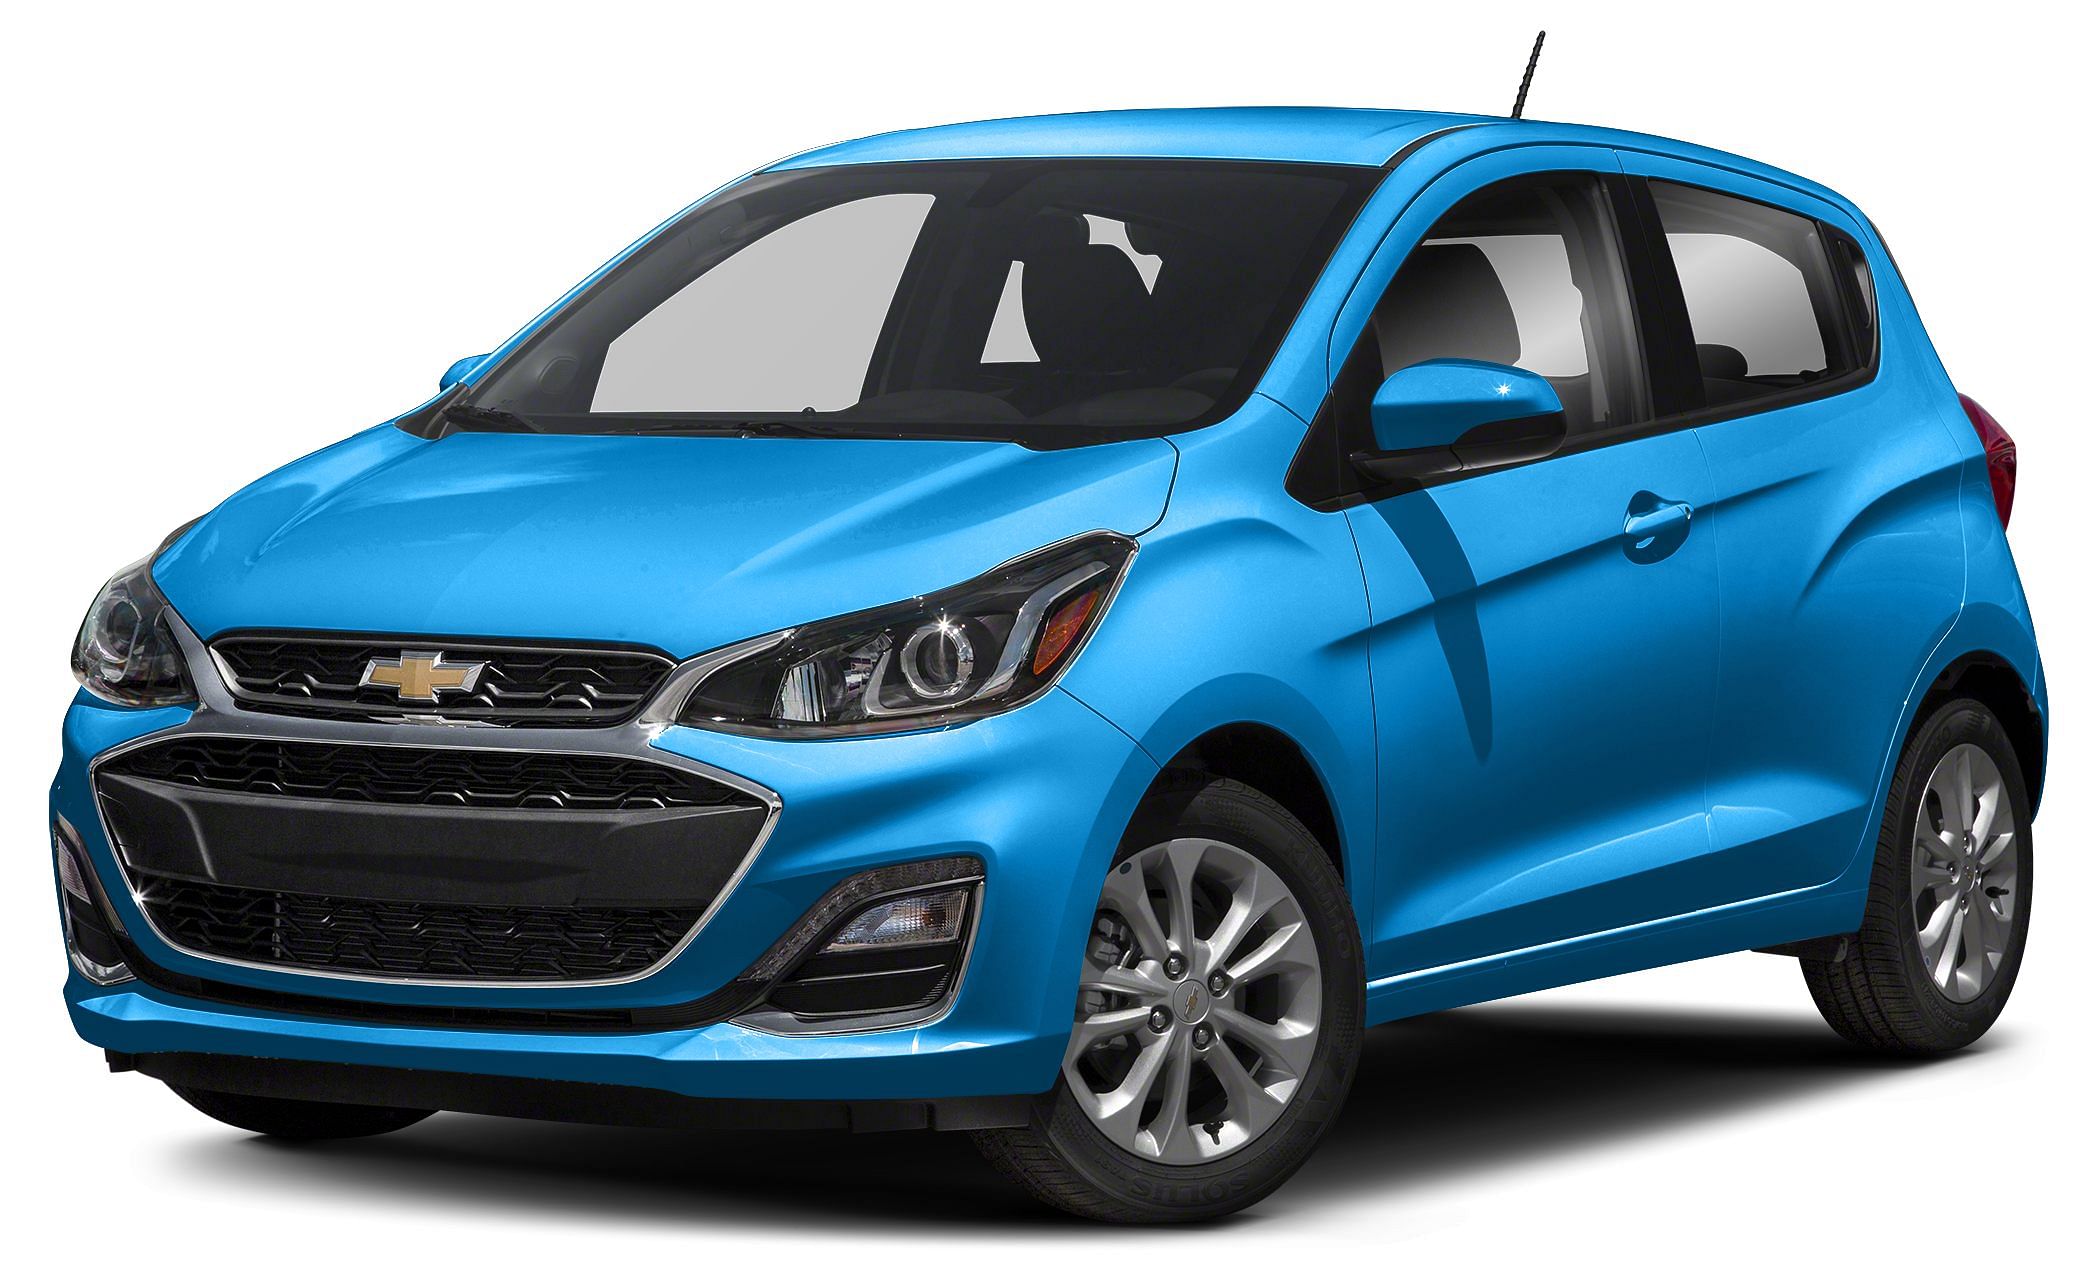 2020 Chevrolet Spark in Caribbean Blue color